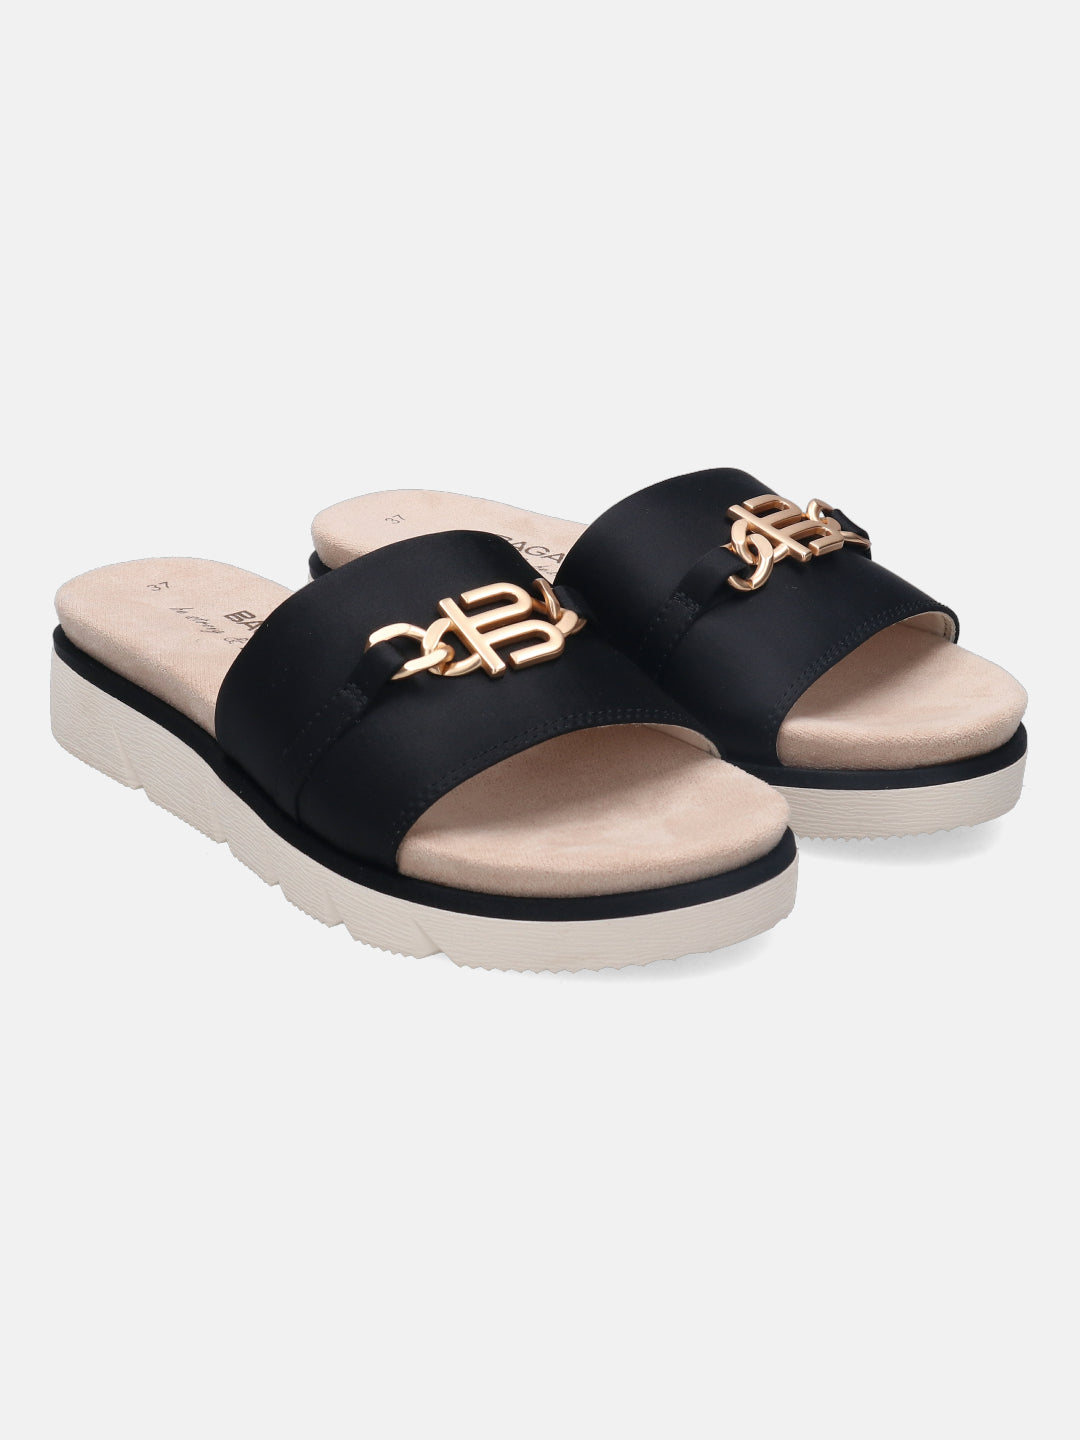 Kiko Beige Flatform Sandals